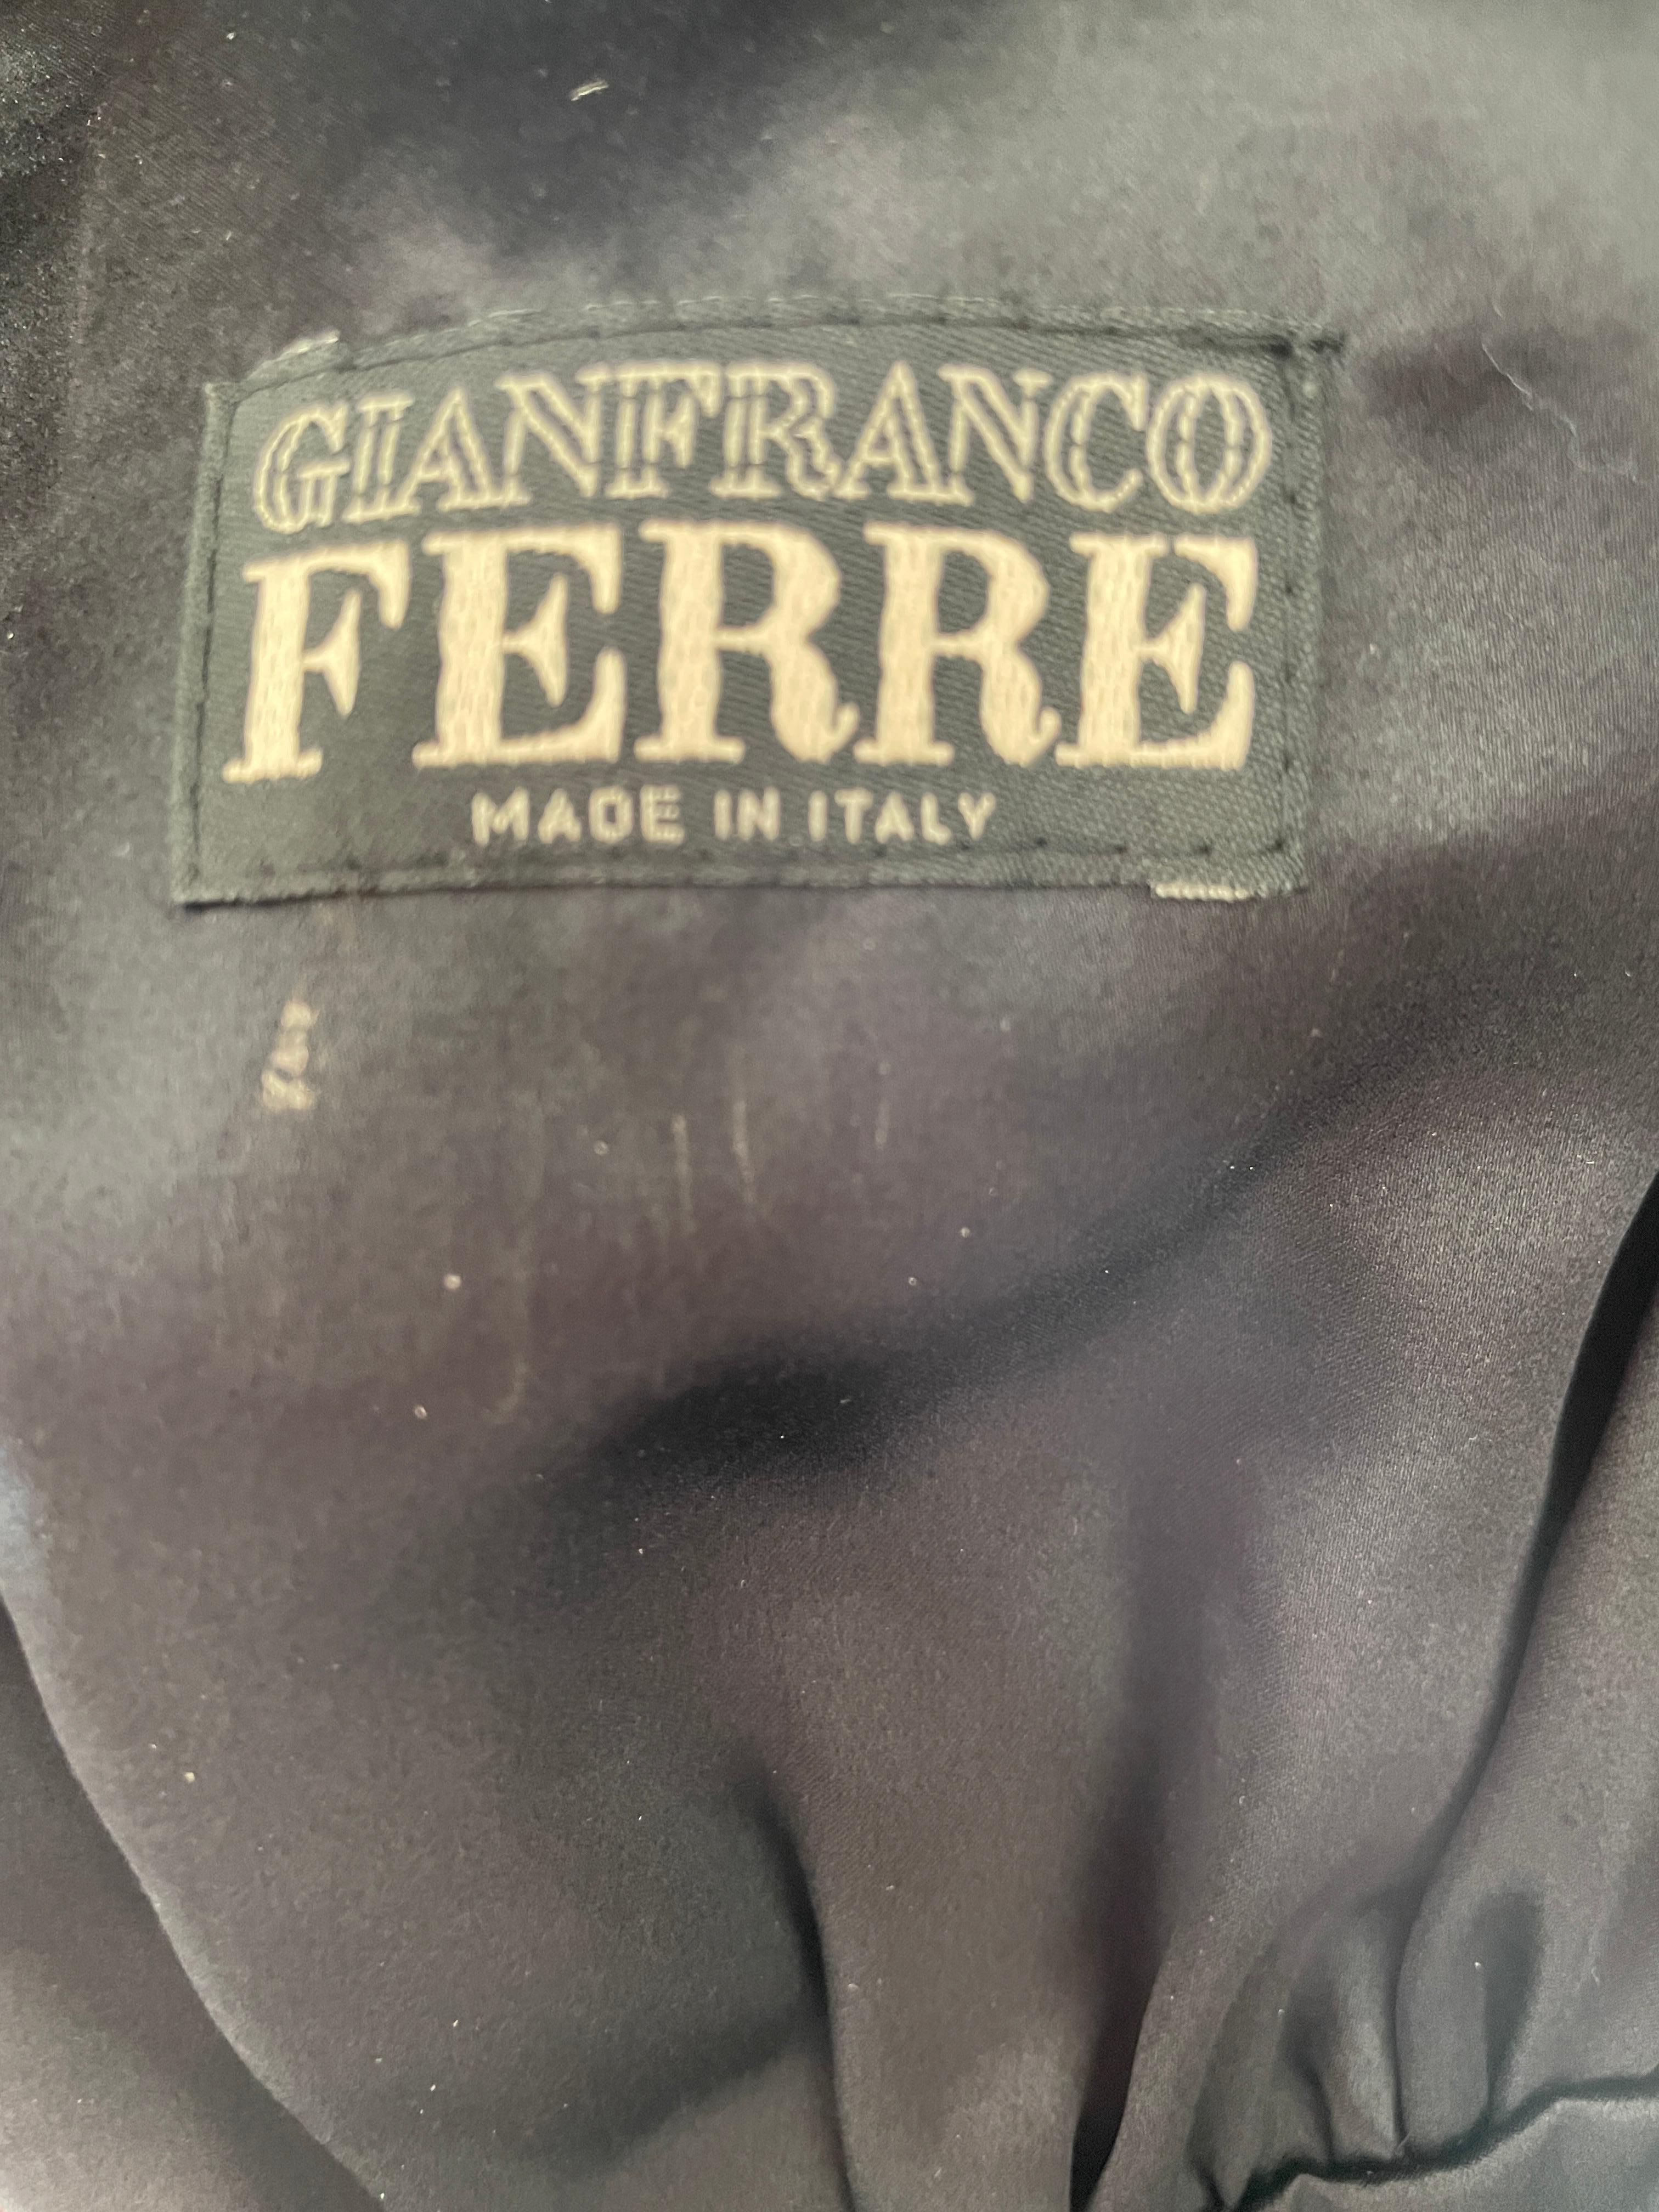  Gianfranco Ferre Vintage Lambskin Leather Moto Vest with Corset Lacing Details
 Size 40
Bust 36